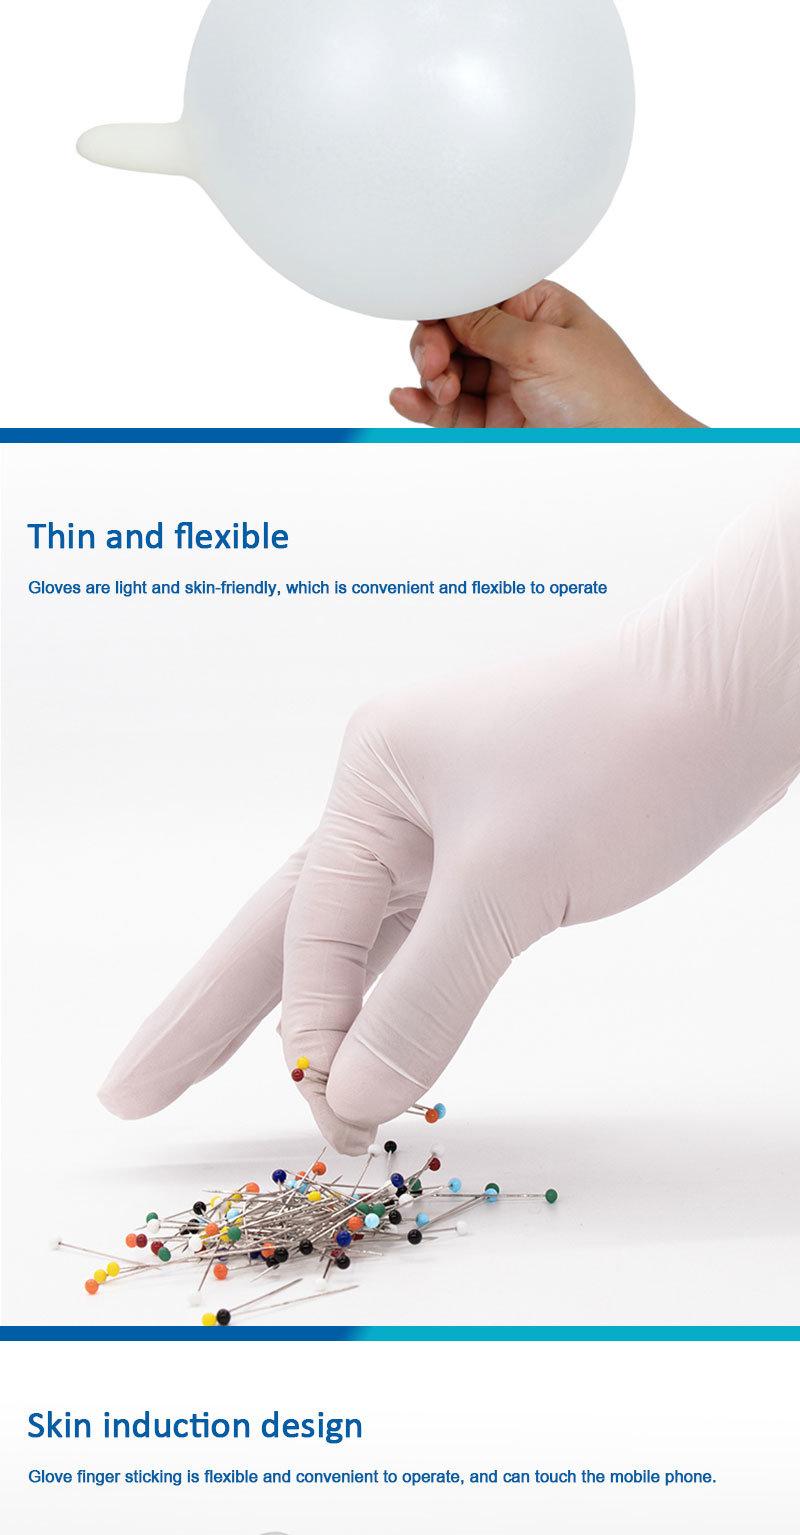 Powder Free Disposable Latex Examination Gloves